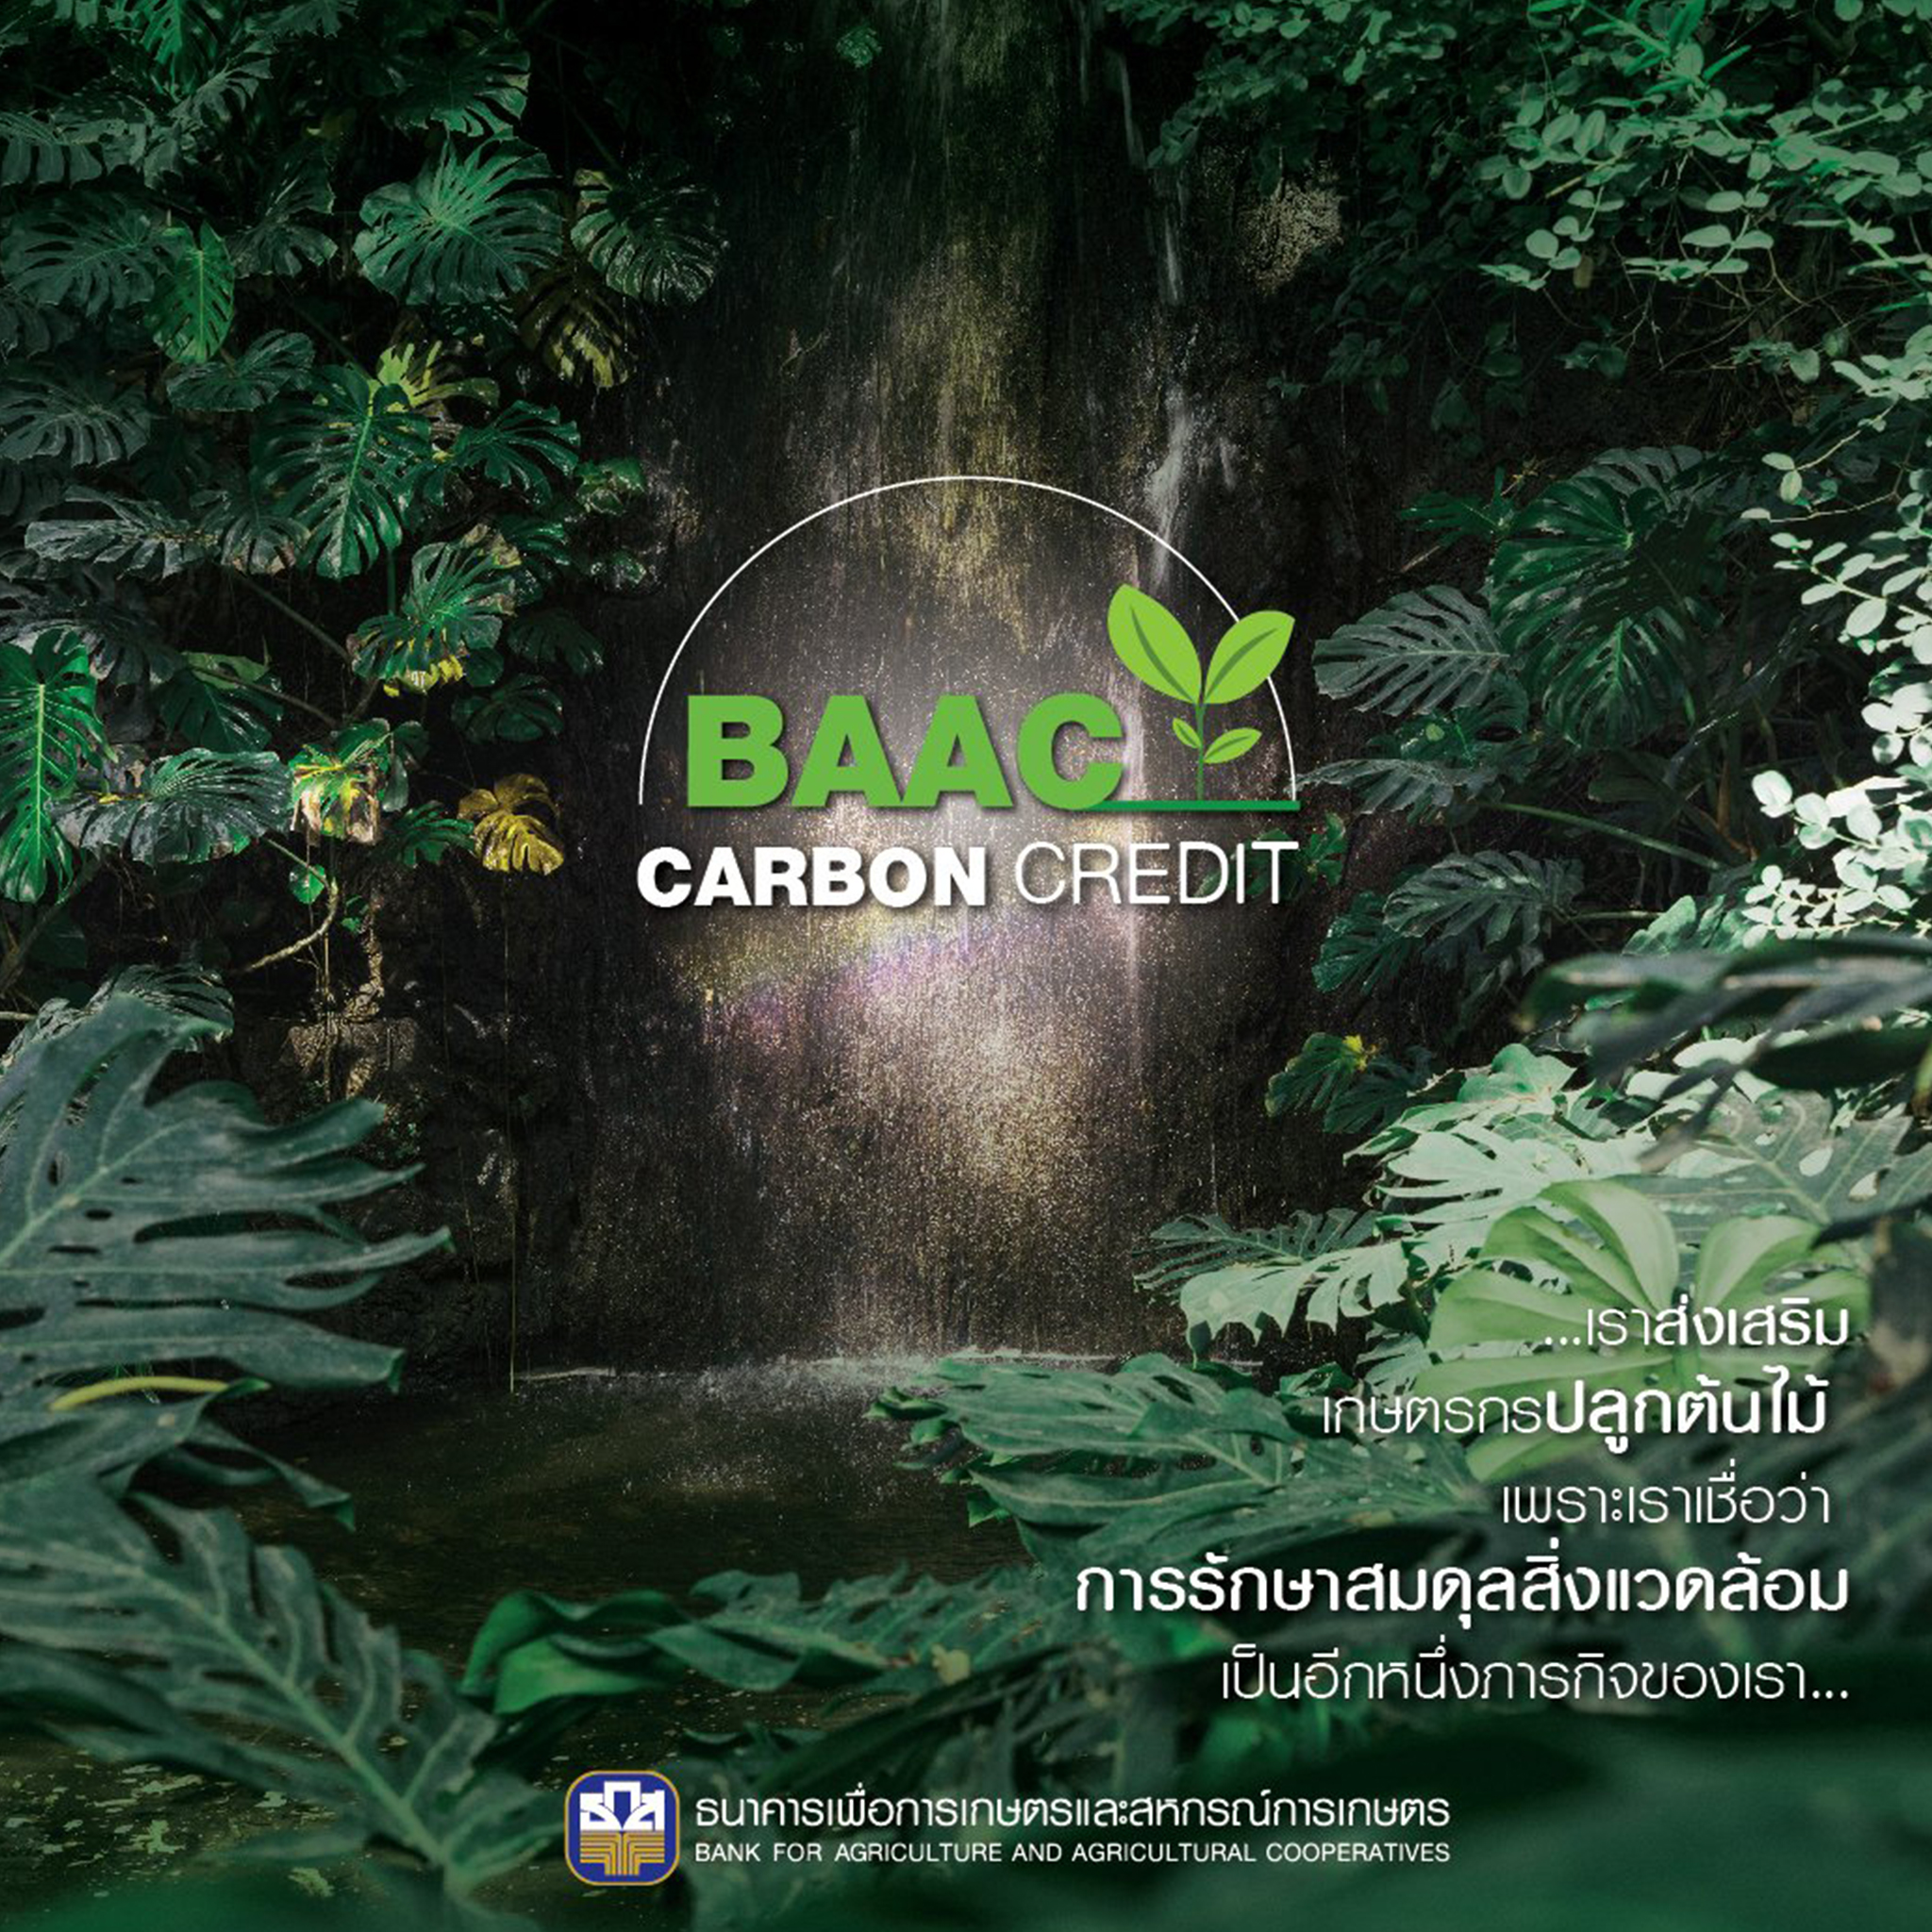 BAAC Carbon Credit